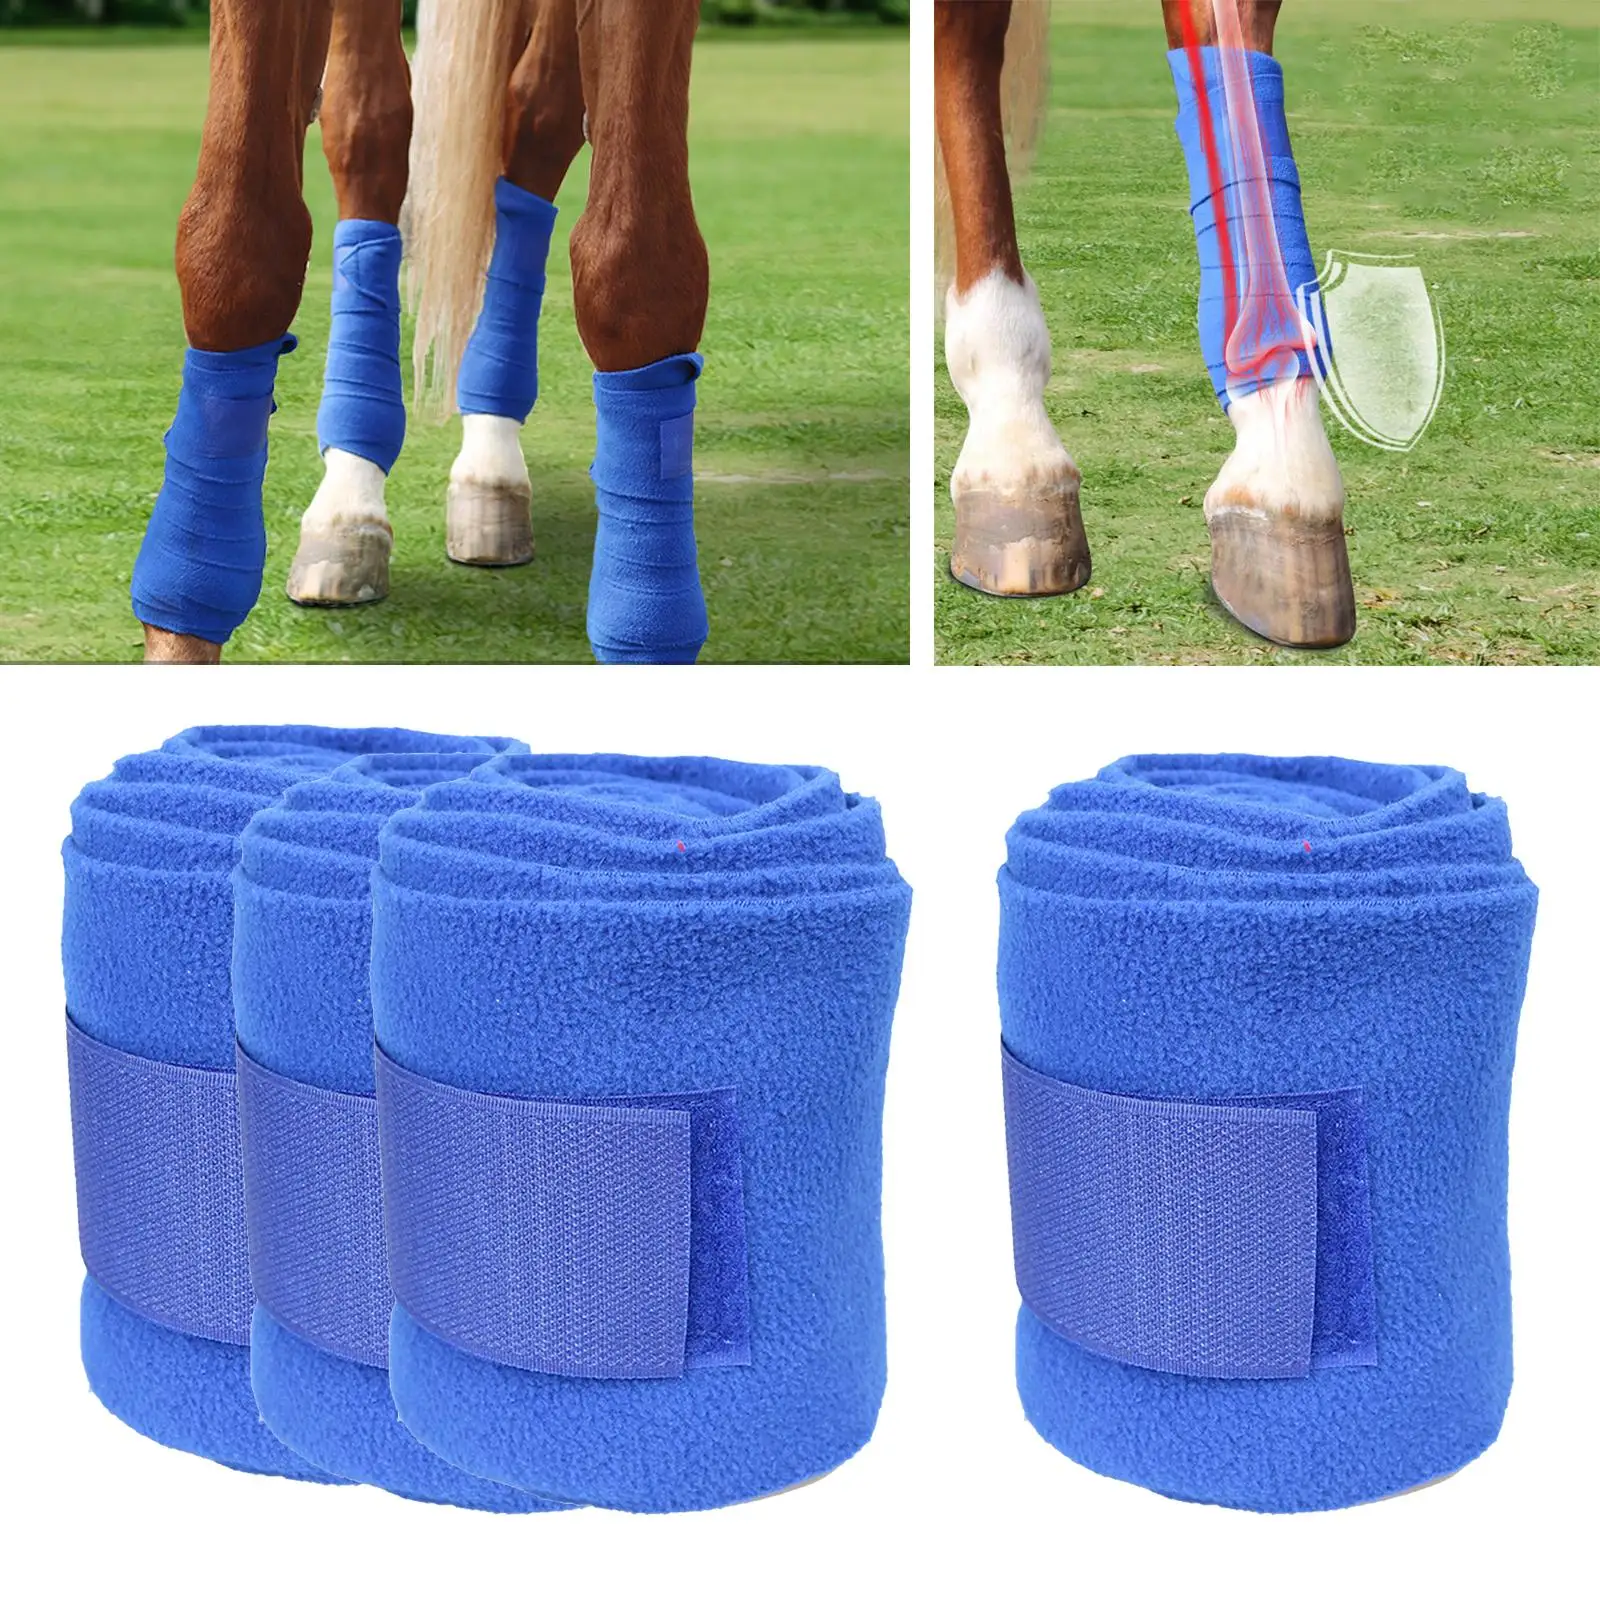 4pcs Soft Fleece Horse Leg Wraps Protect Bandage For Equestrian Riding Racing